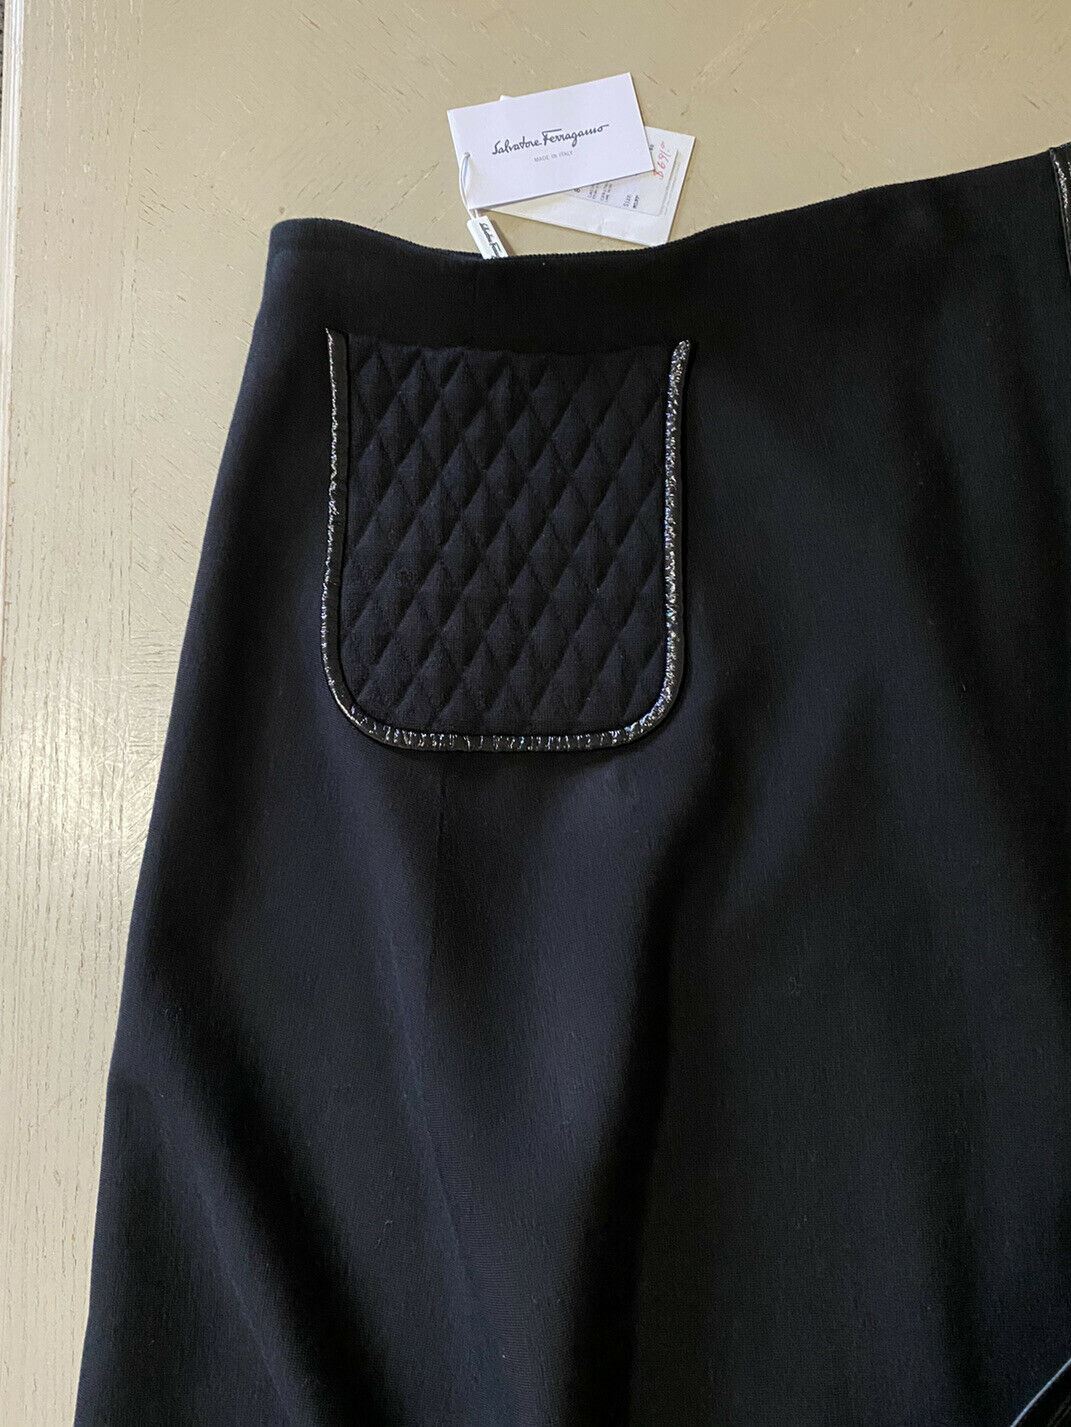 New $1150 Salvatore Ferragamo Skirt Black Size L Made in Italy